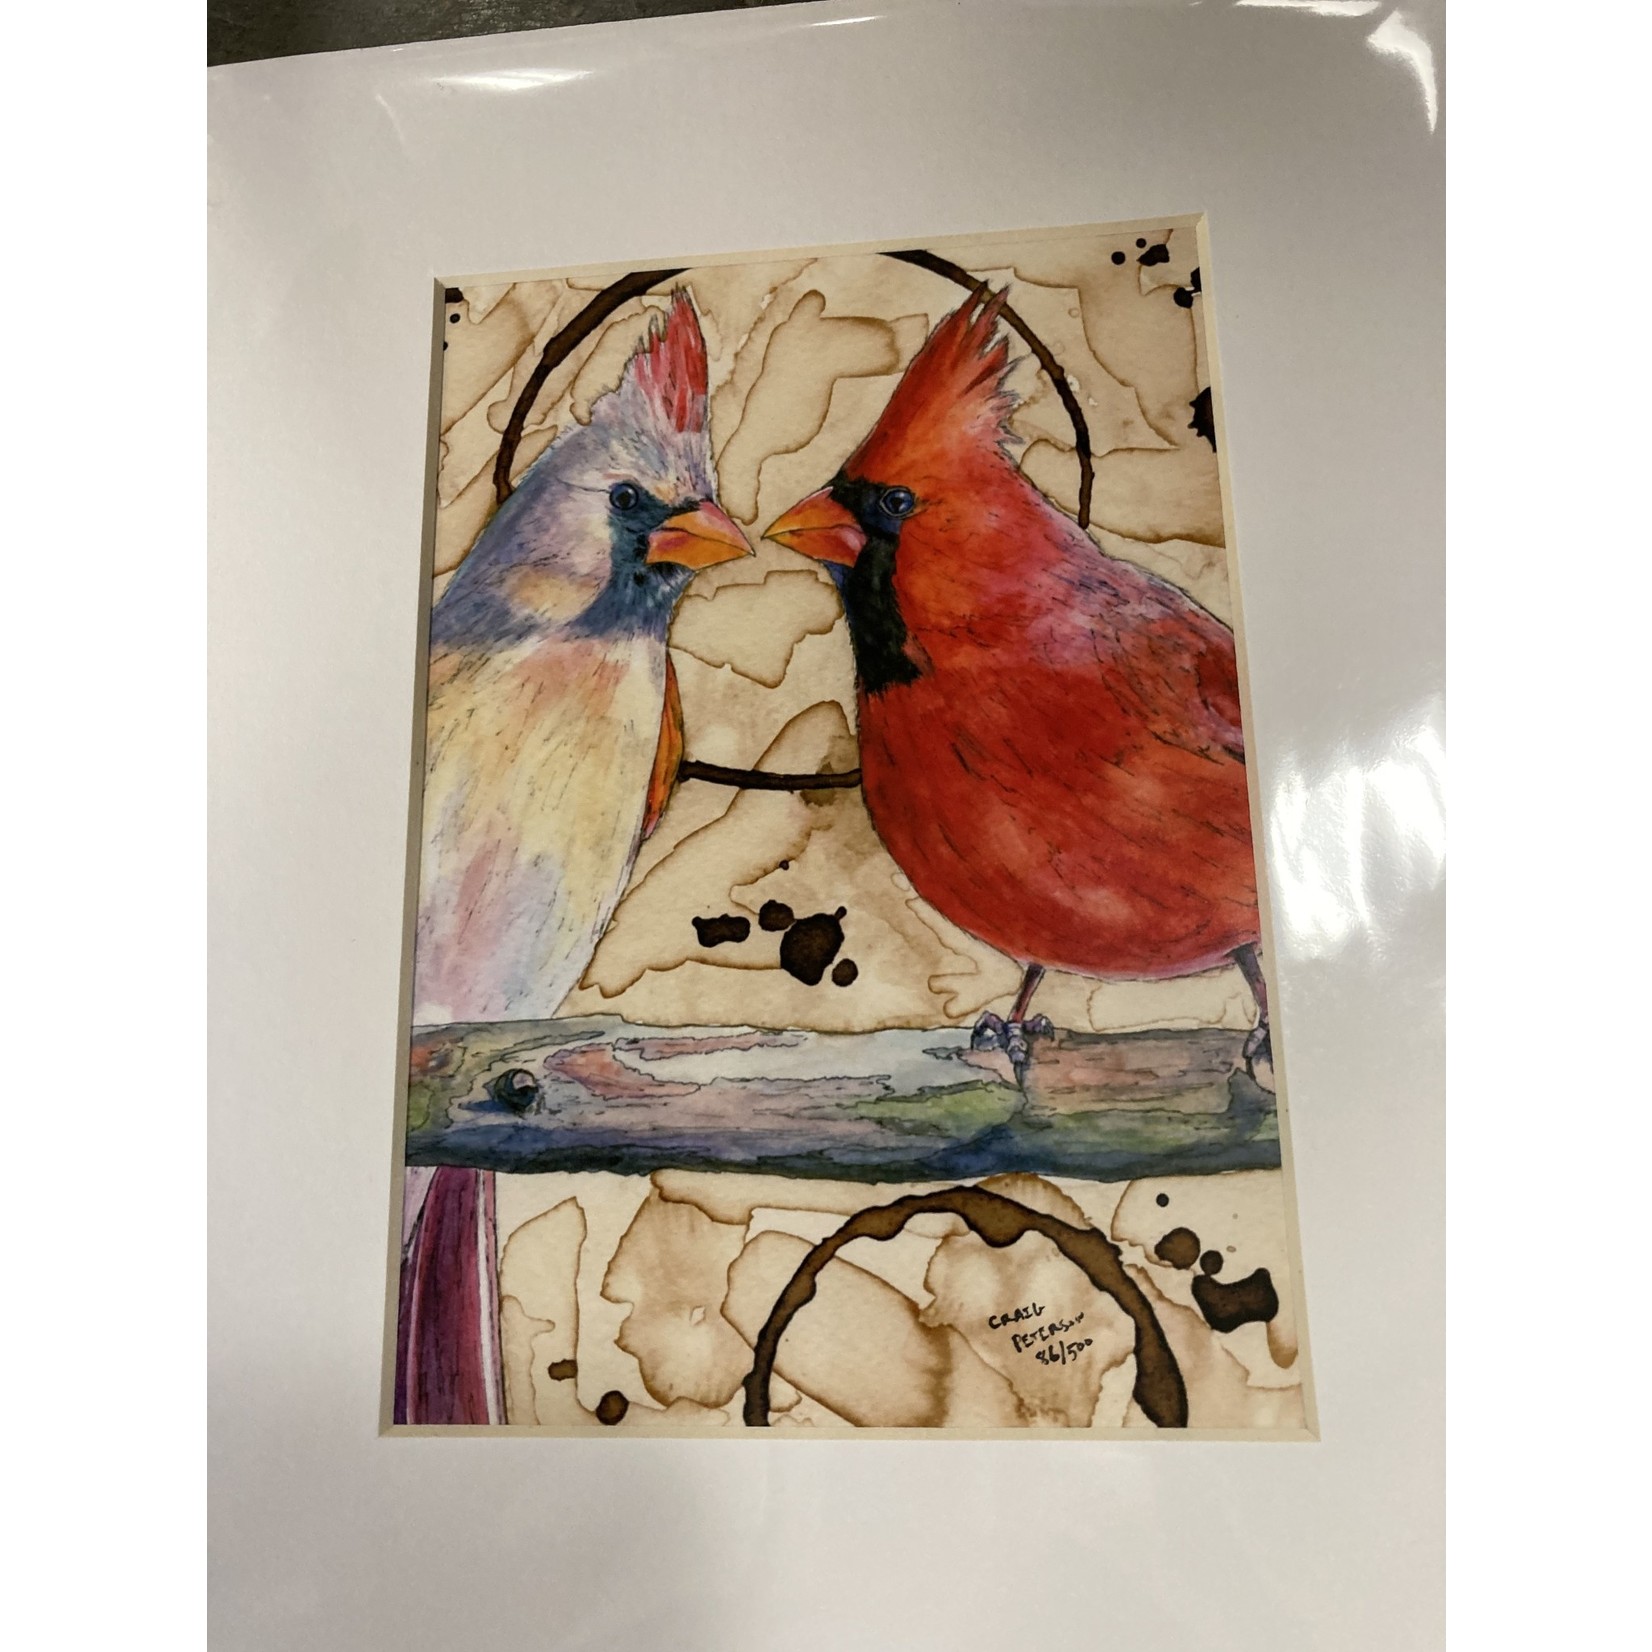 Craig Peterson Craig Peterson | 2 cardinals coffee stain watercolor